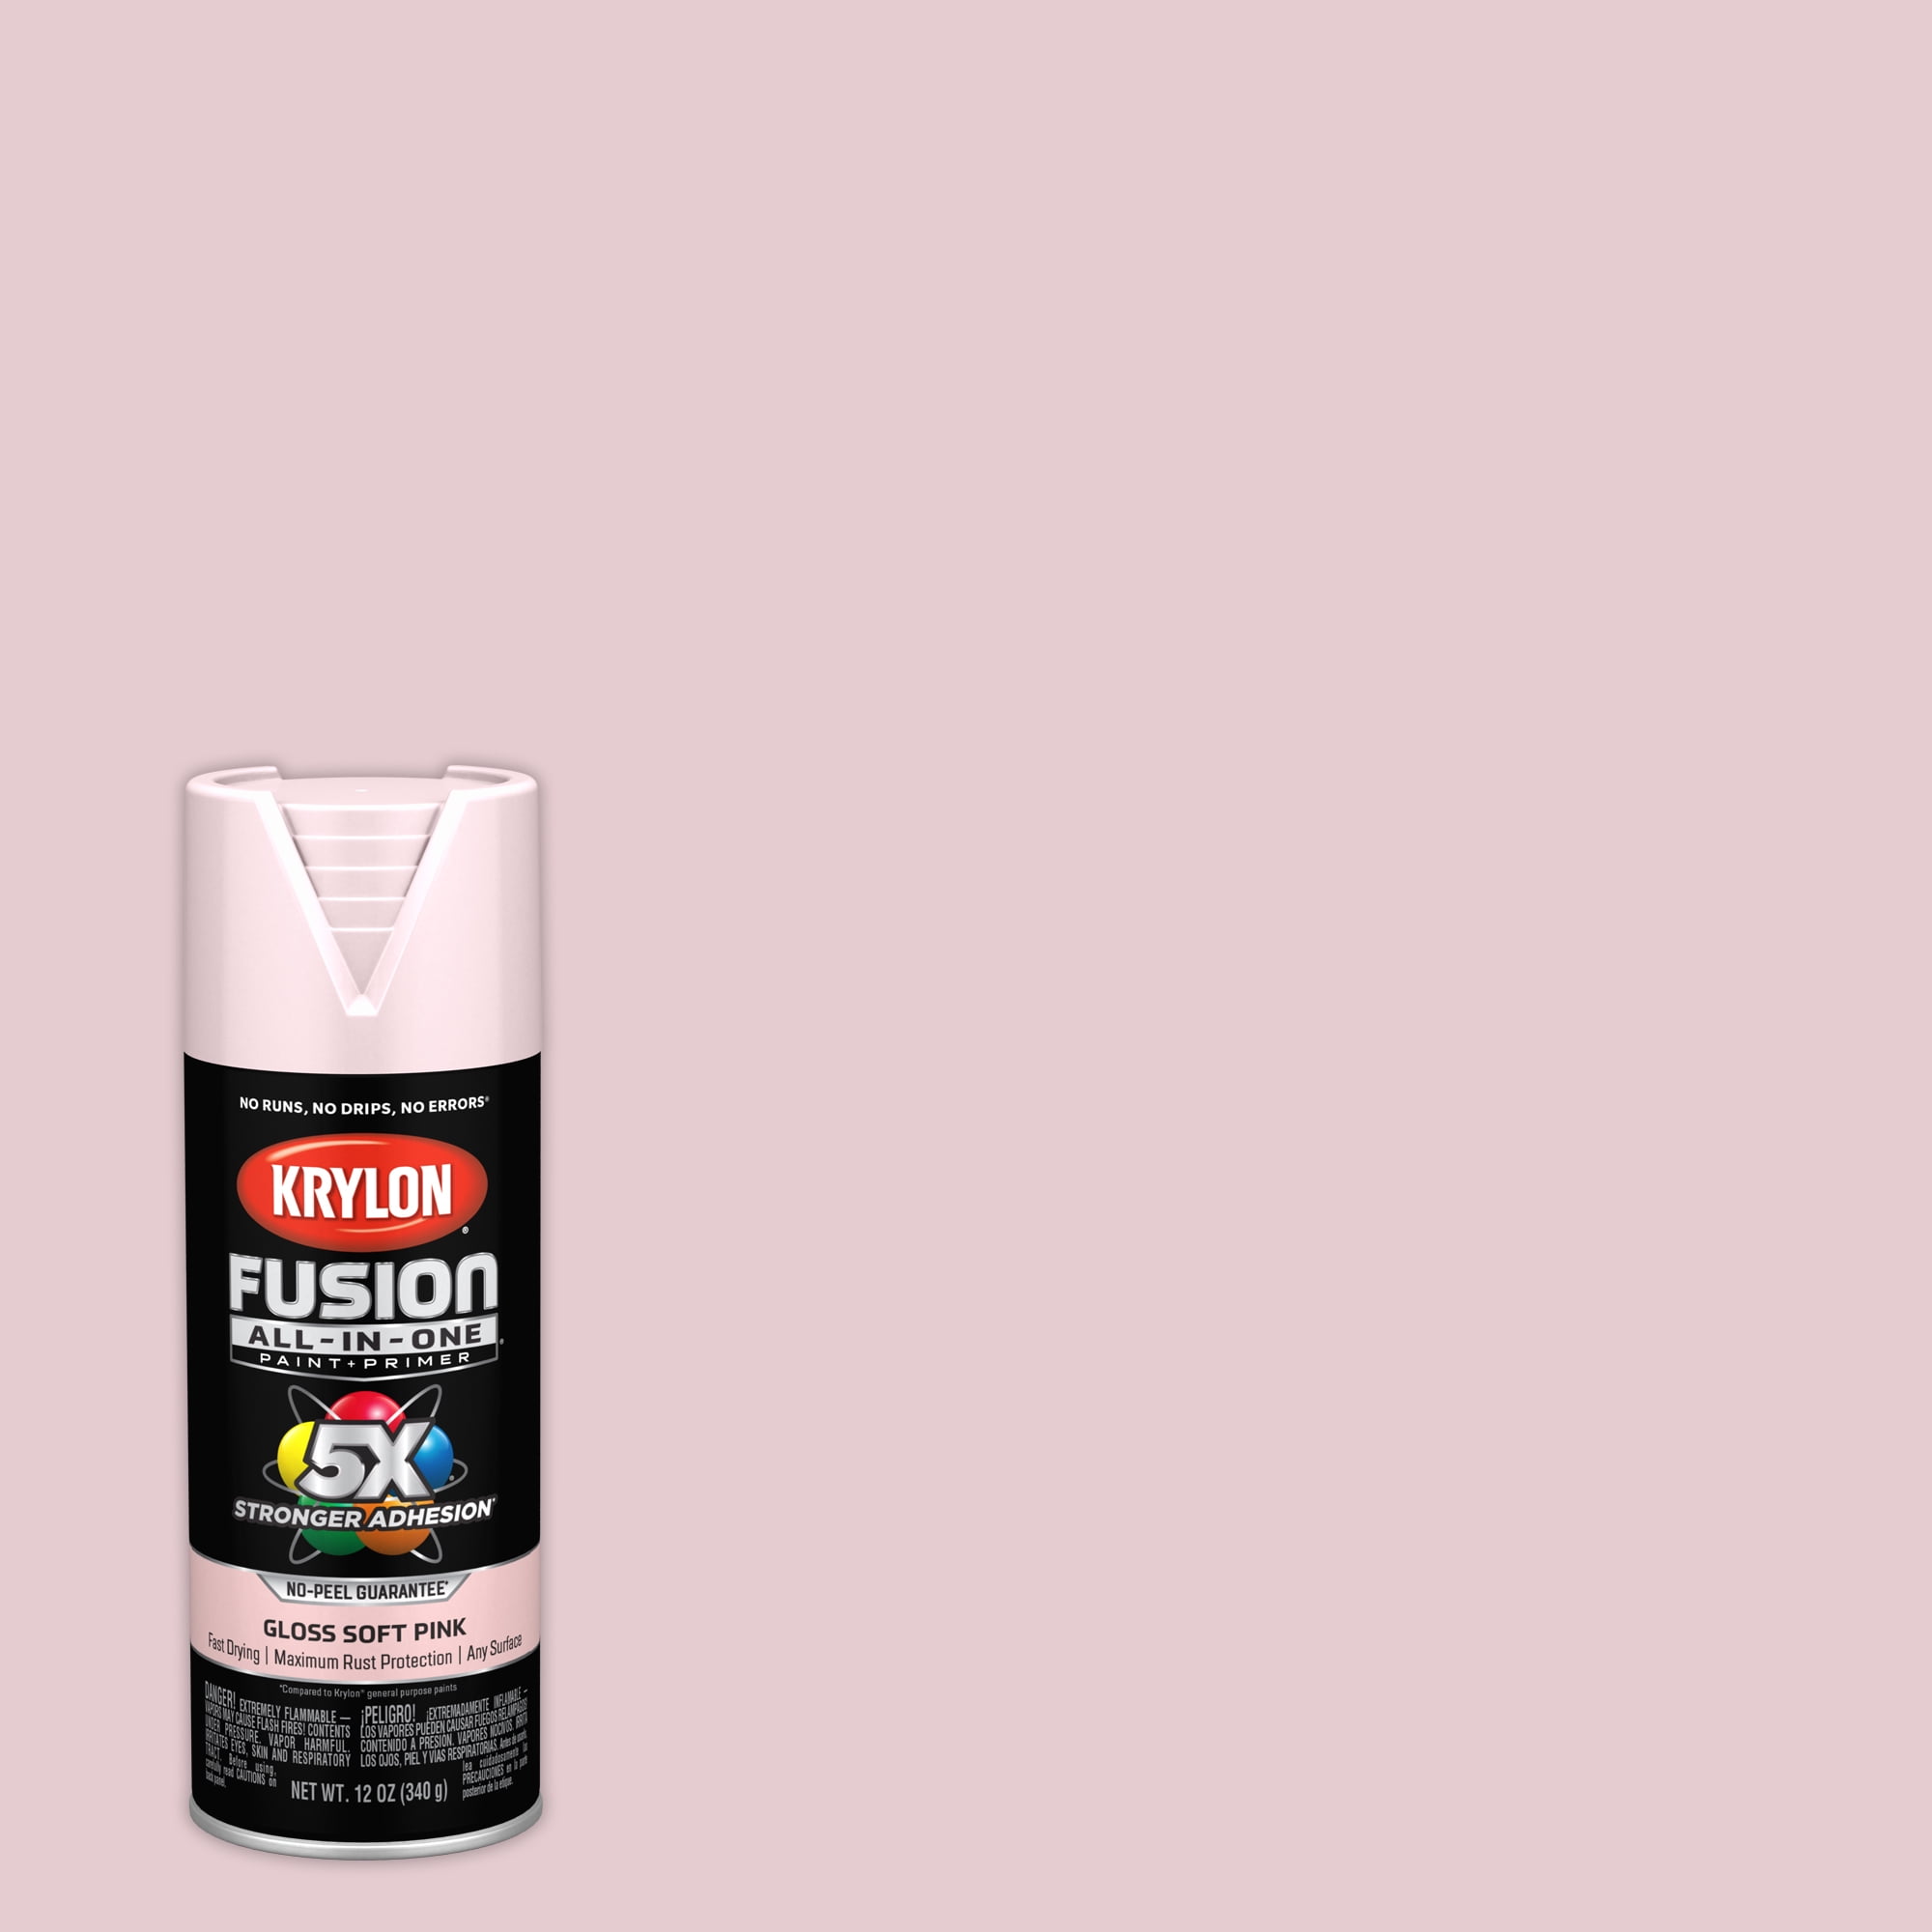 6-Krylon 11 Oz. Fluorescent Spray Paint, Cerise Pink Model: K03105777